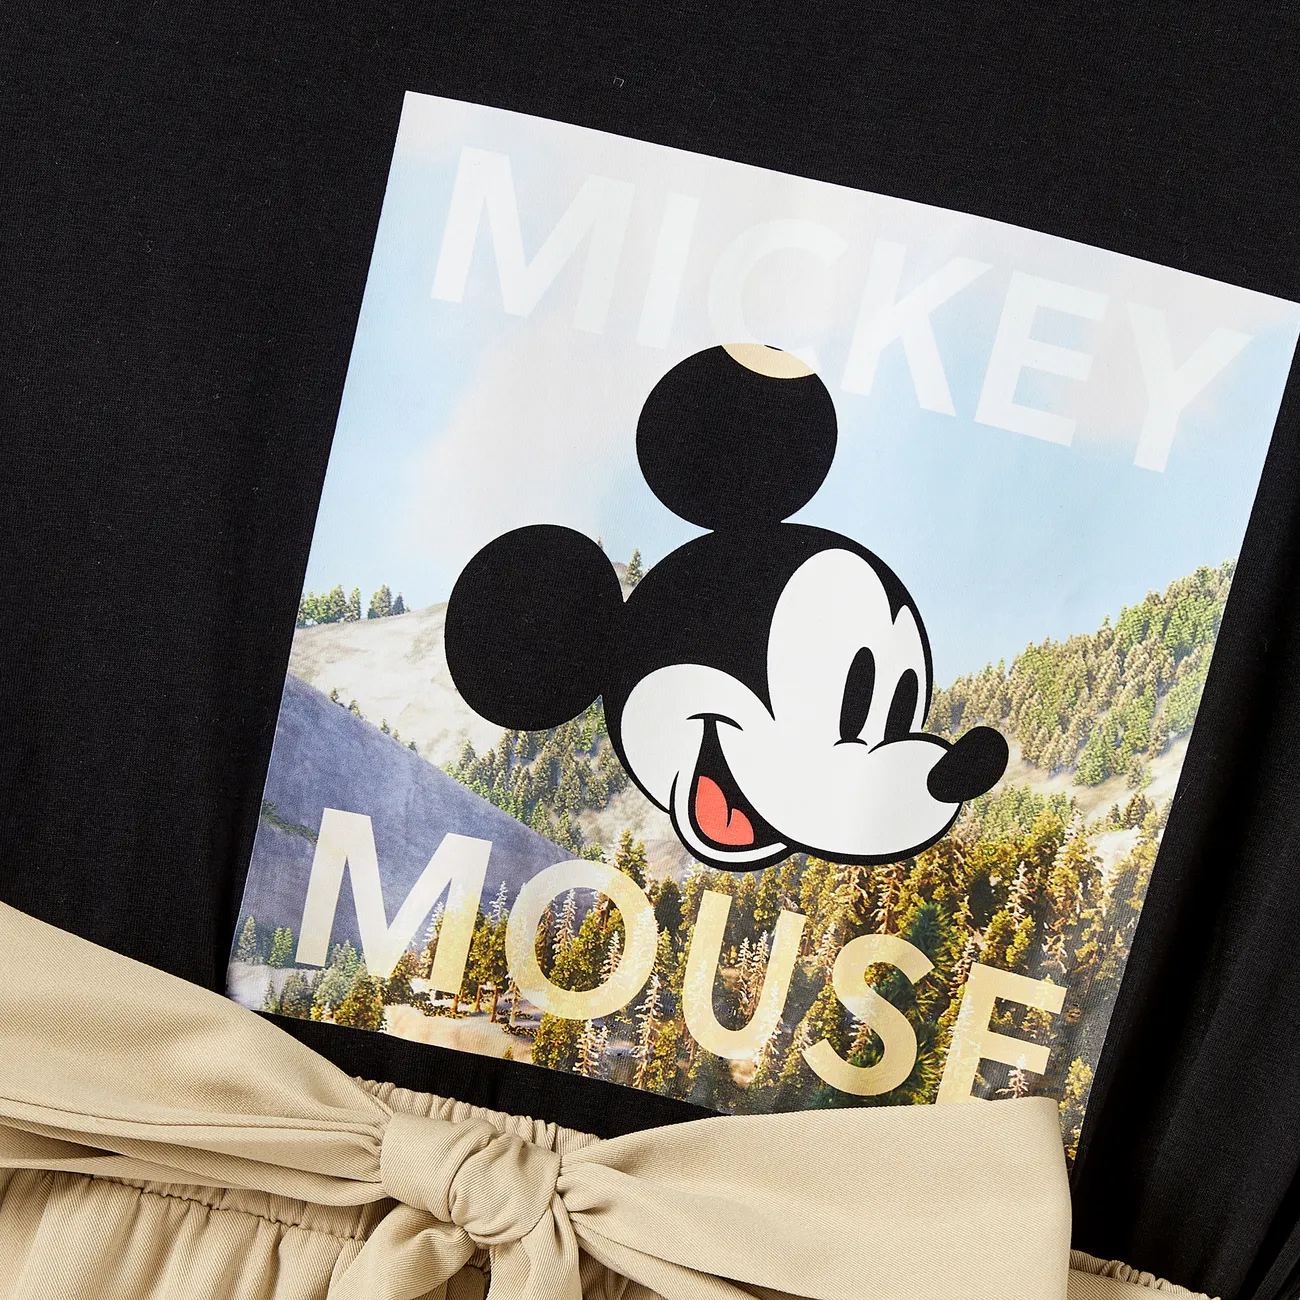 Disney Mickey and Friends Muttertag Familien-Looks Kurzärmelig Familien-Outfits Sets schwarz big image 1